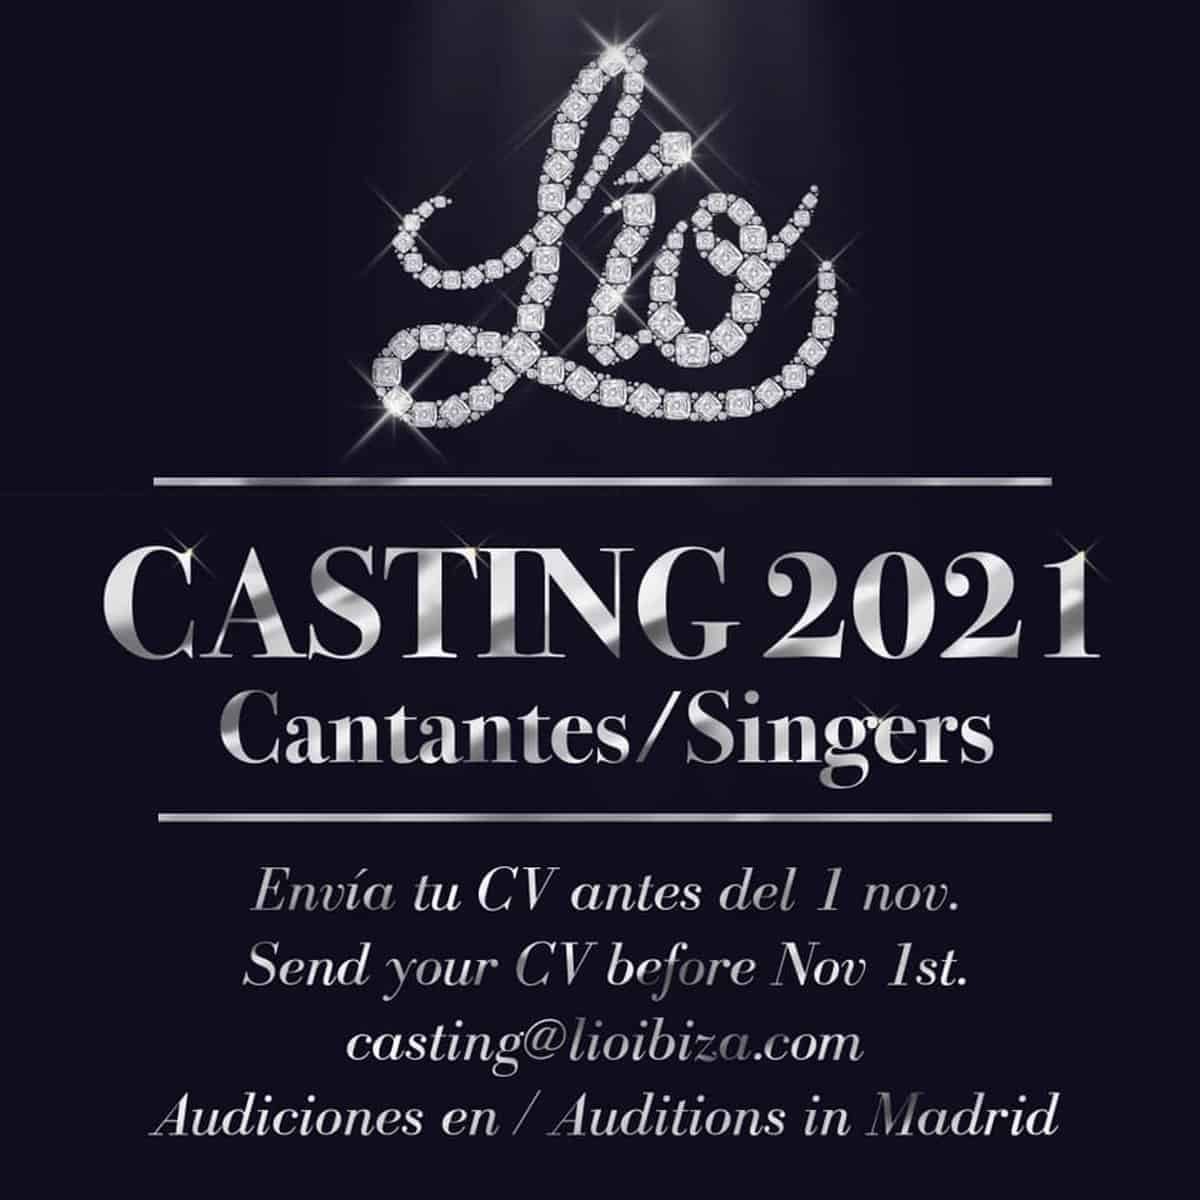 càsting-cantants-lio-Eivissa-2021-treball-en-Eivissa-welcometoibiza